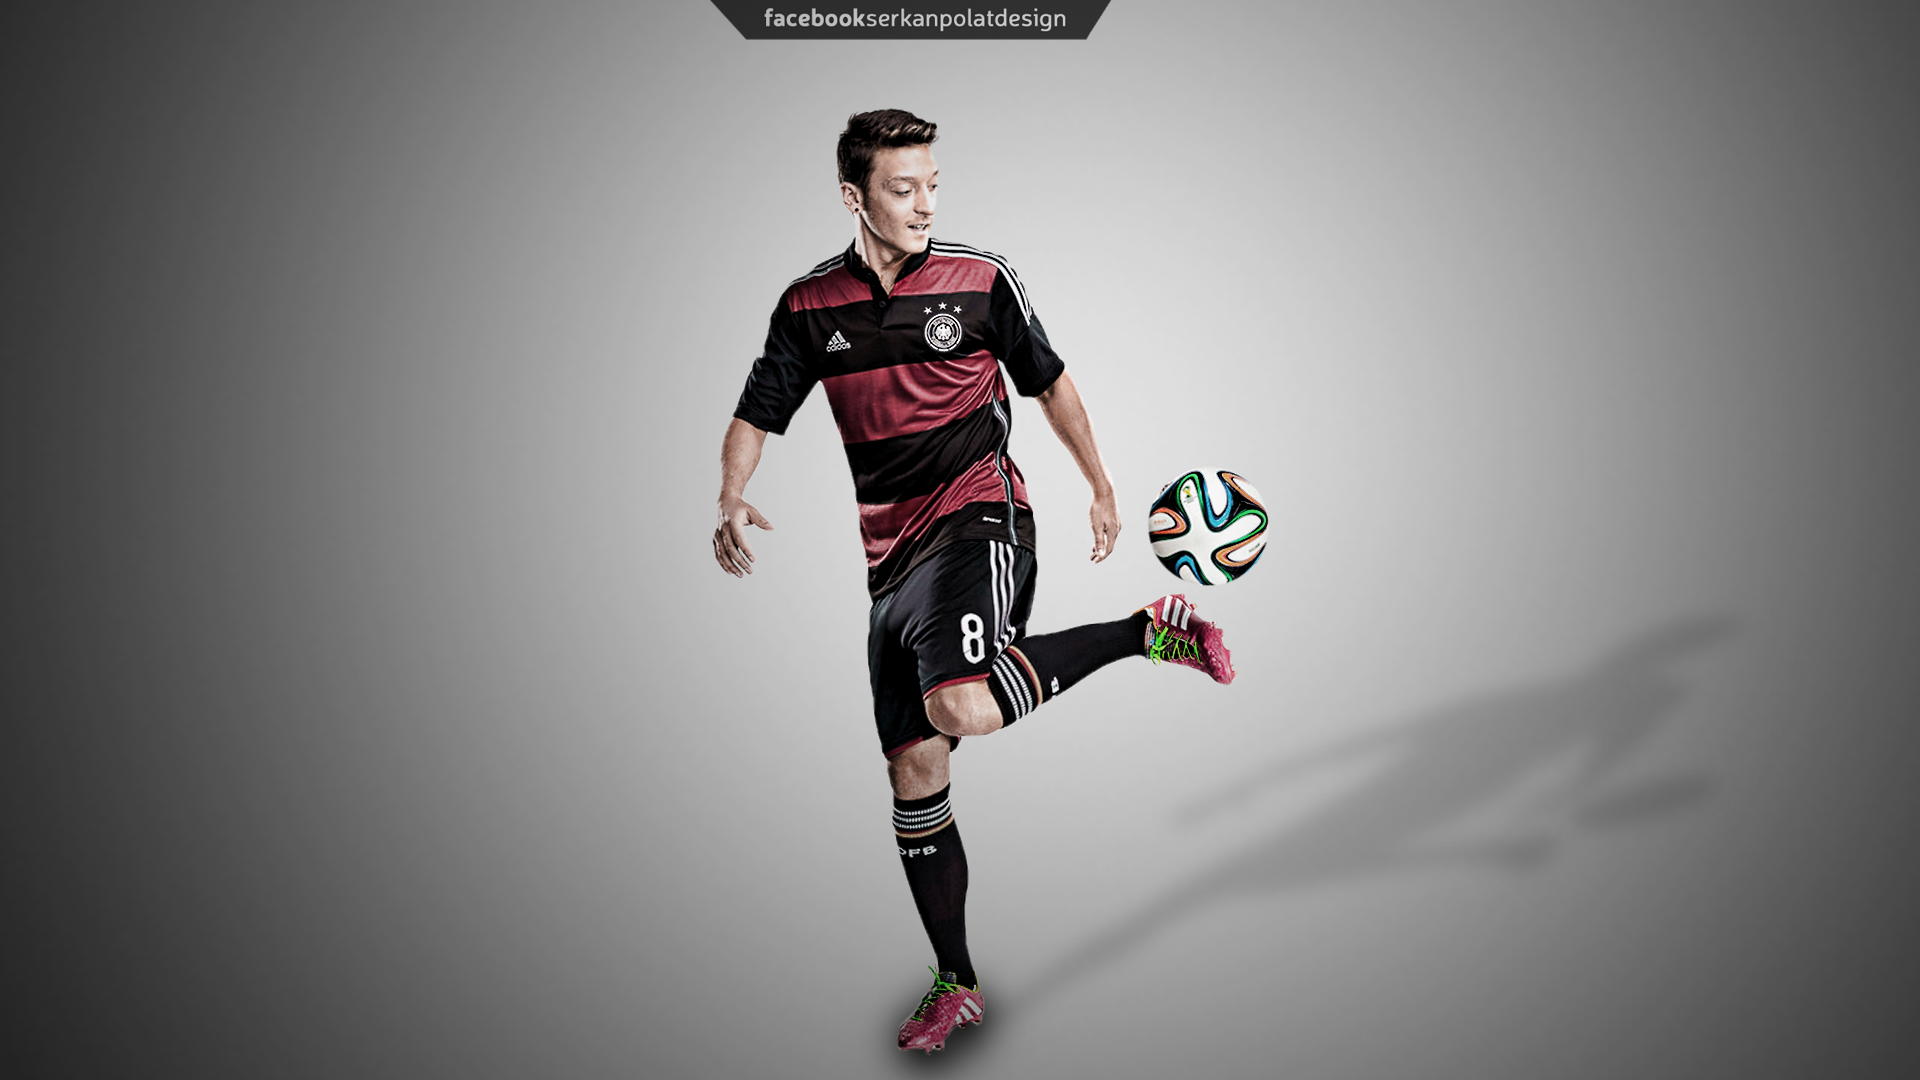 Mesut Ozil Football Star Wallpapers